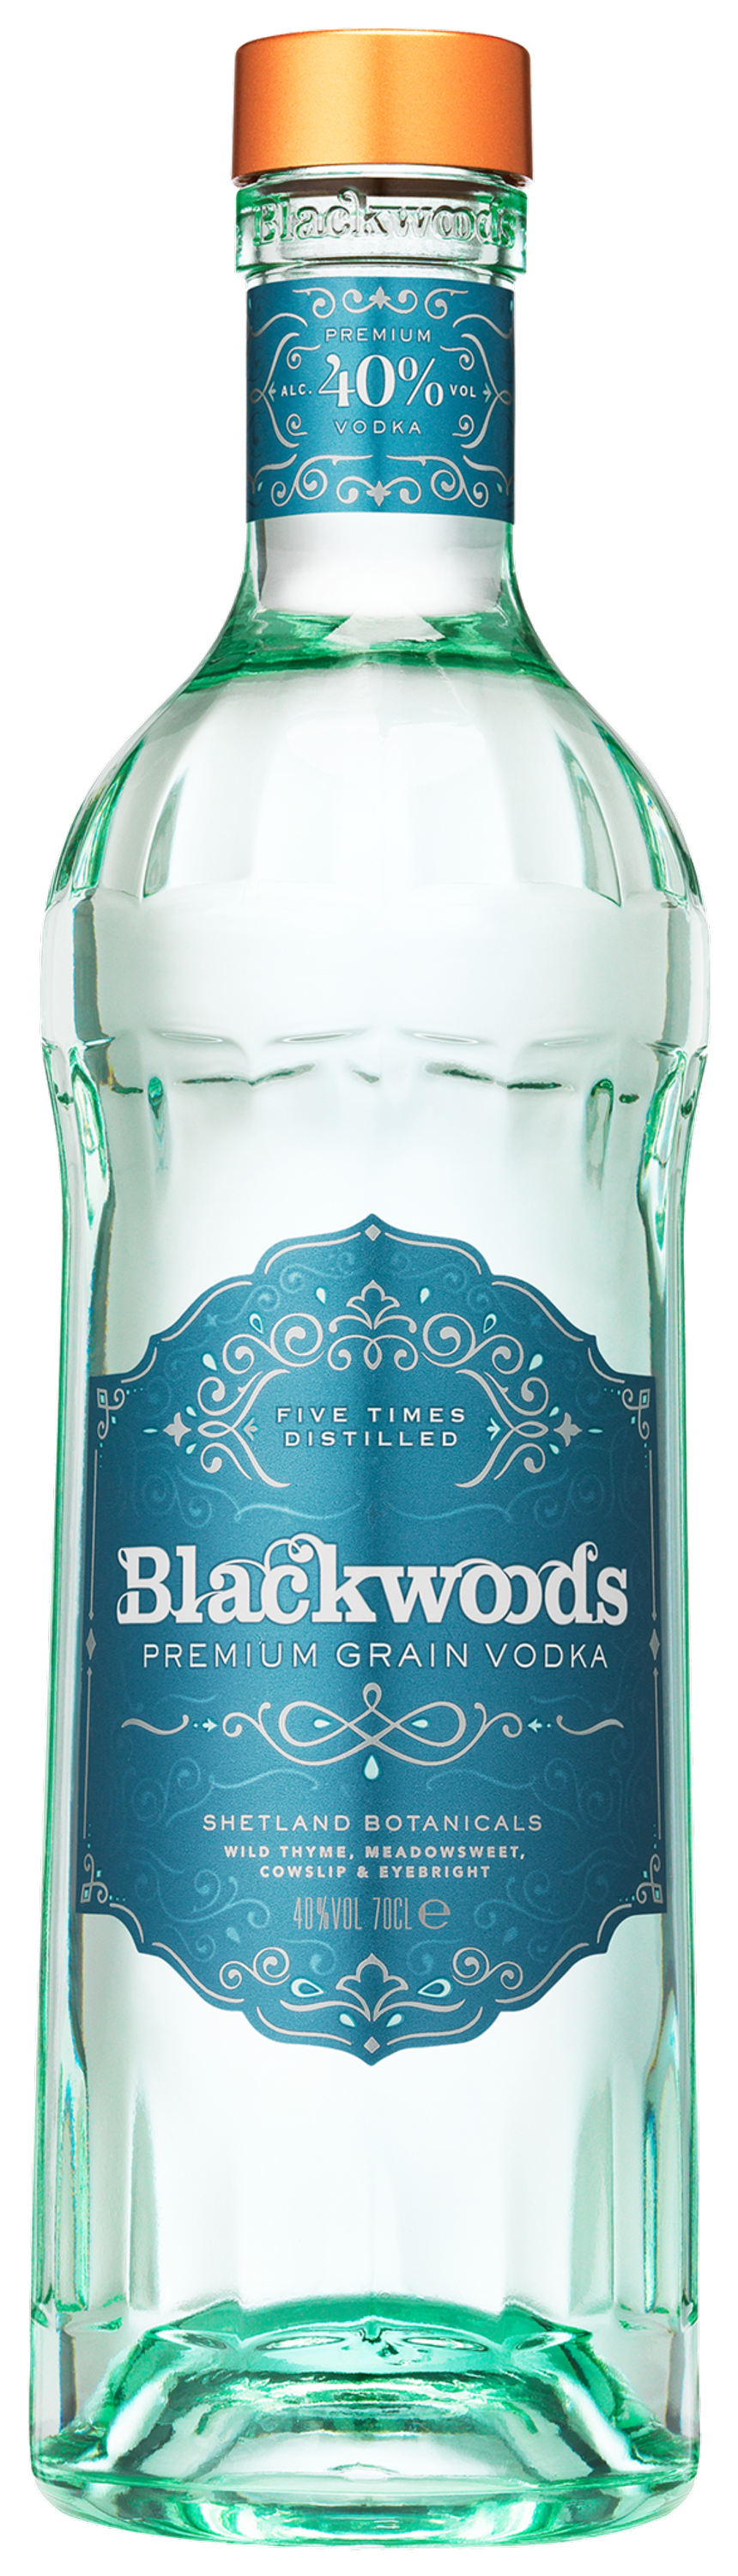 Blackwood's Premium Vodka 0,7l, alk. 40 tilavuusprosenttia, vodka Scotland